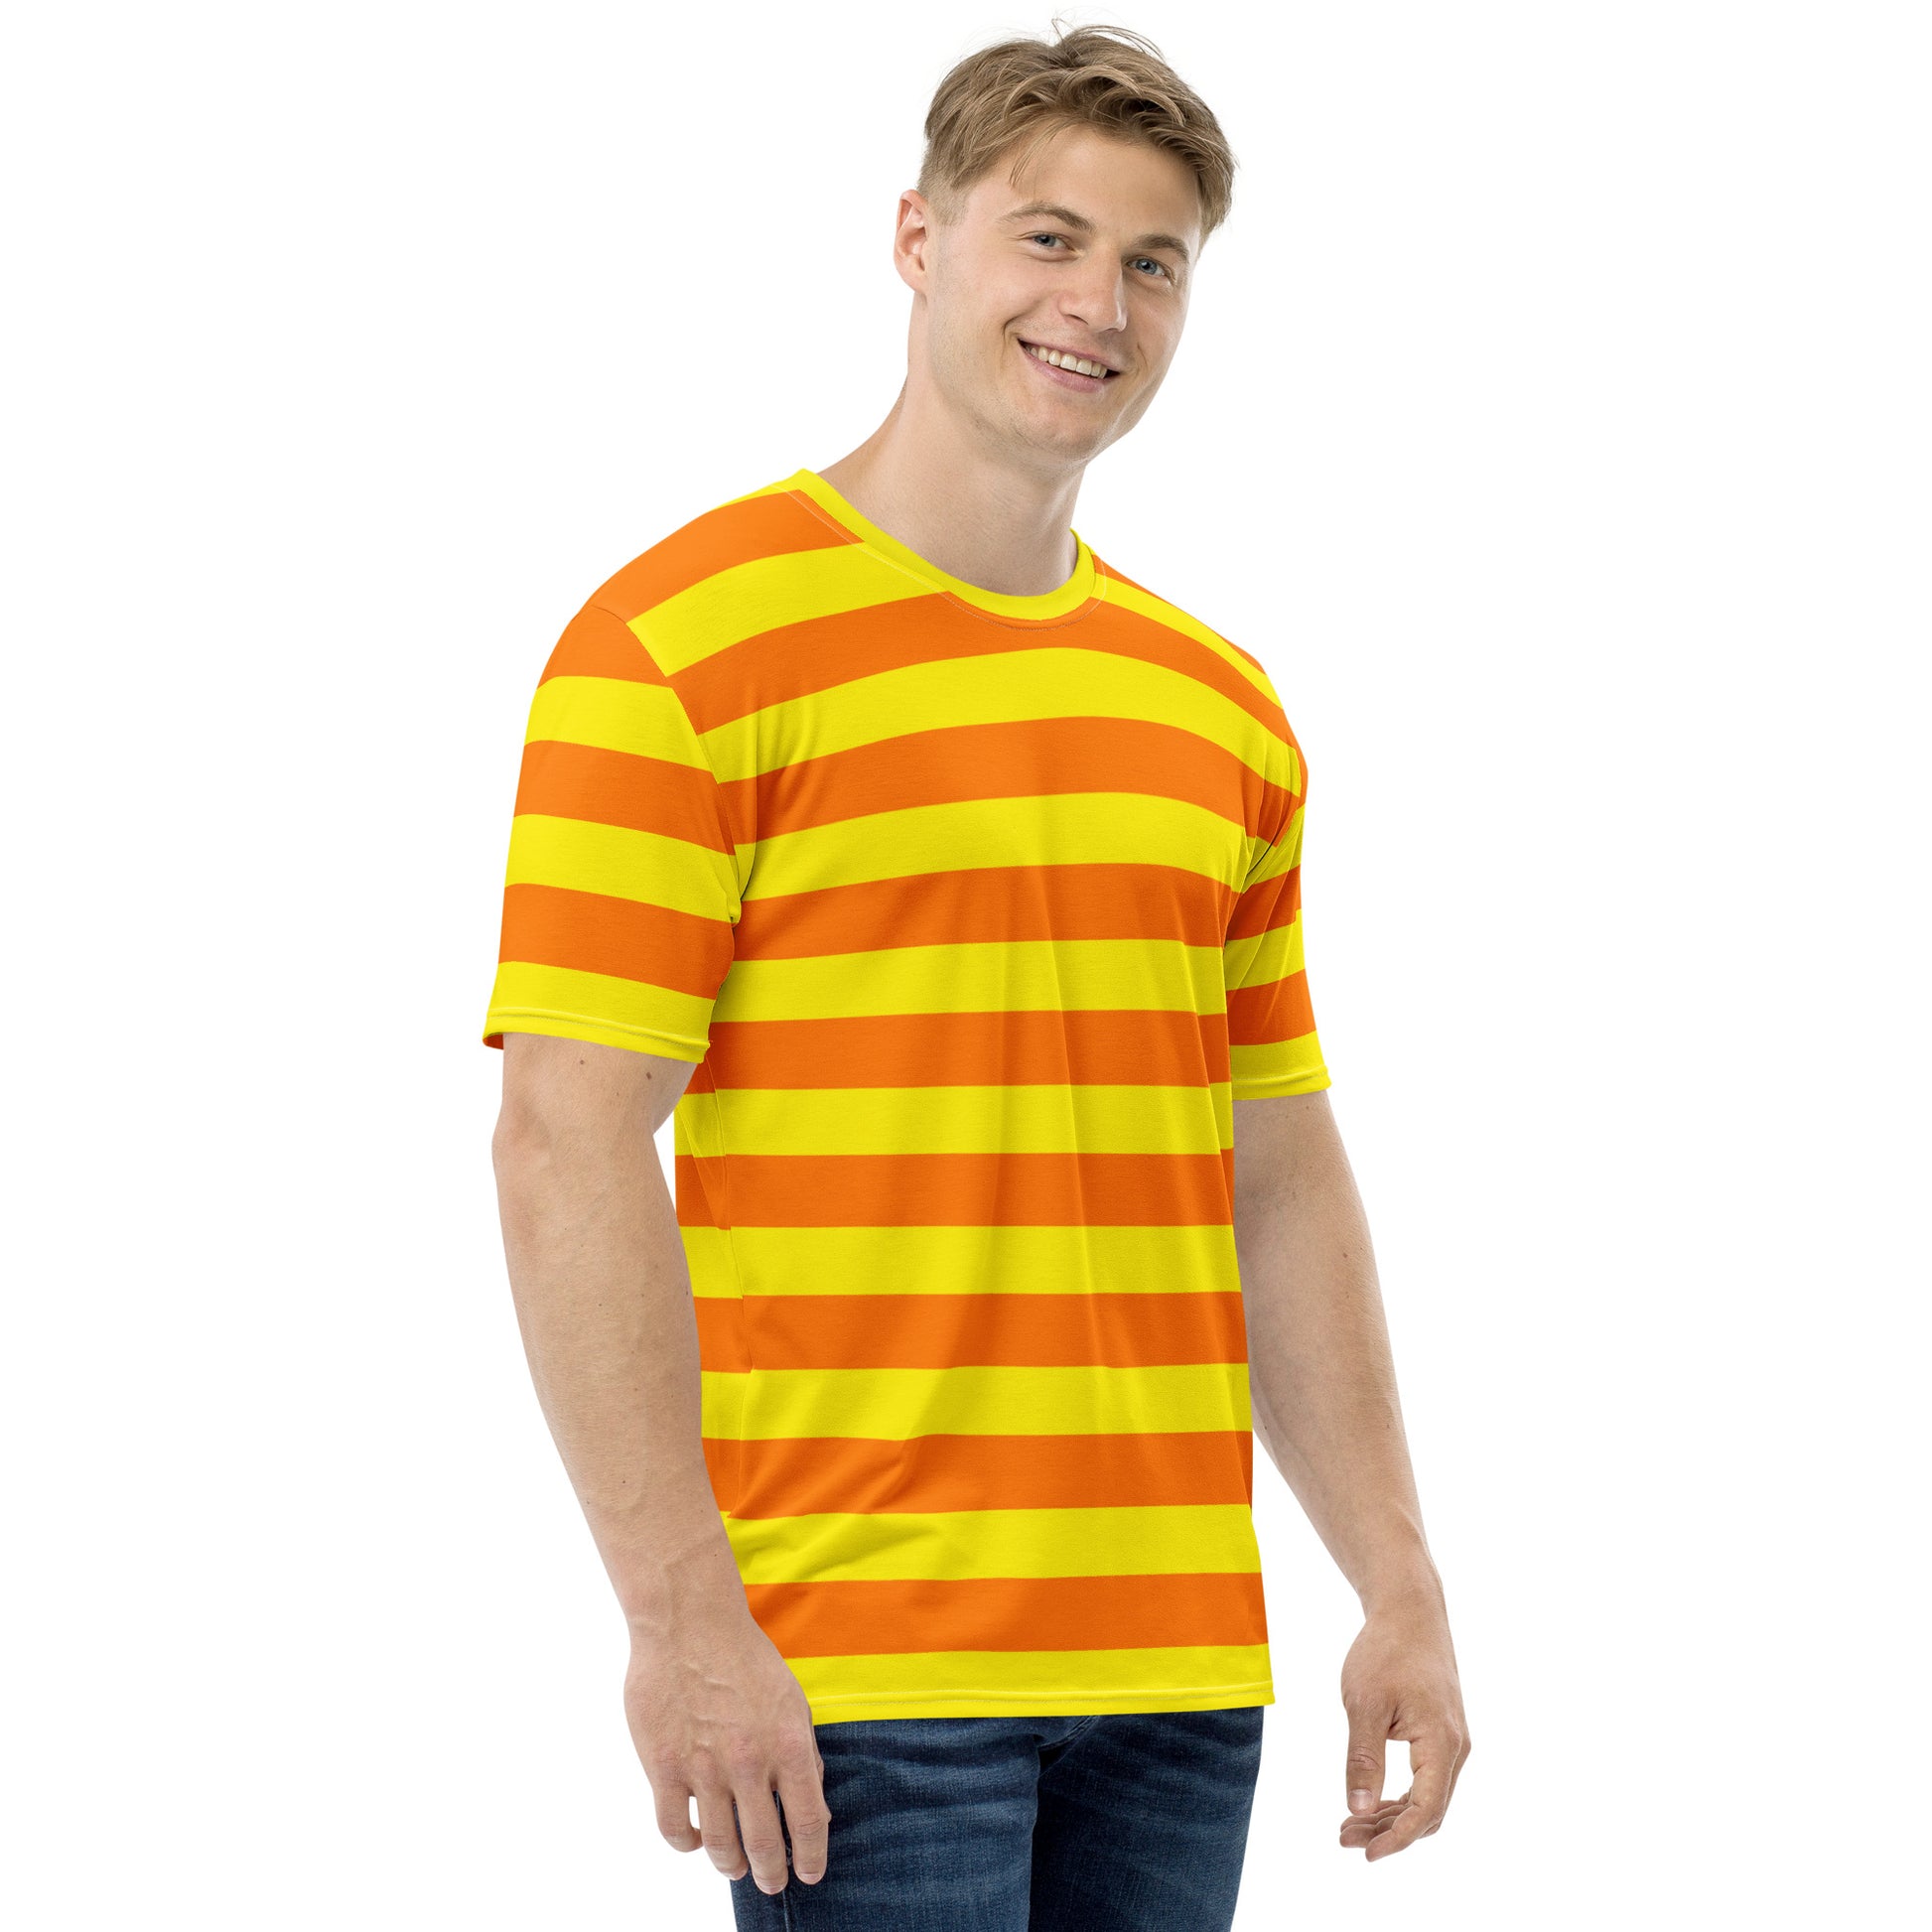 Orange and yellow striped t-shirt